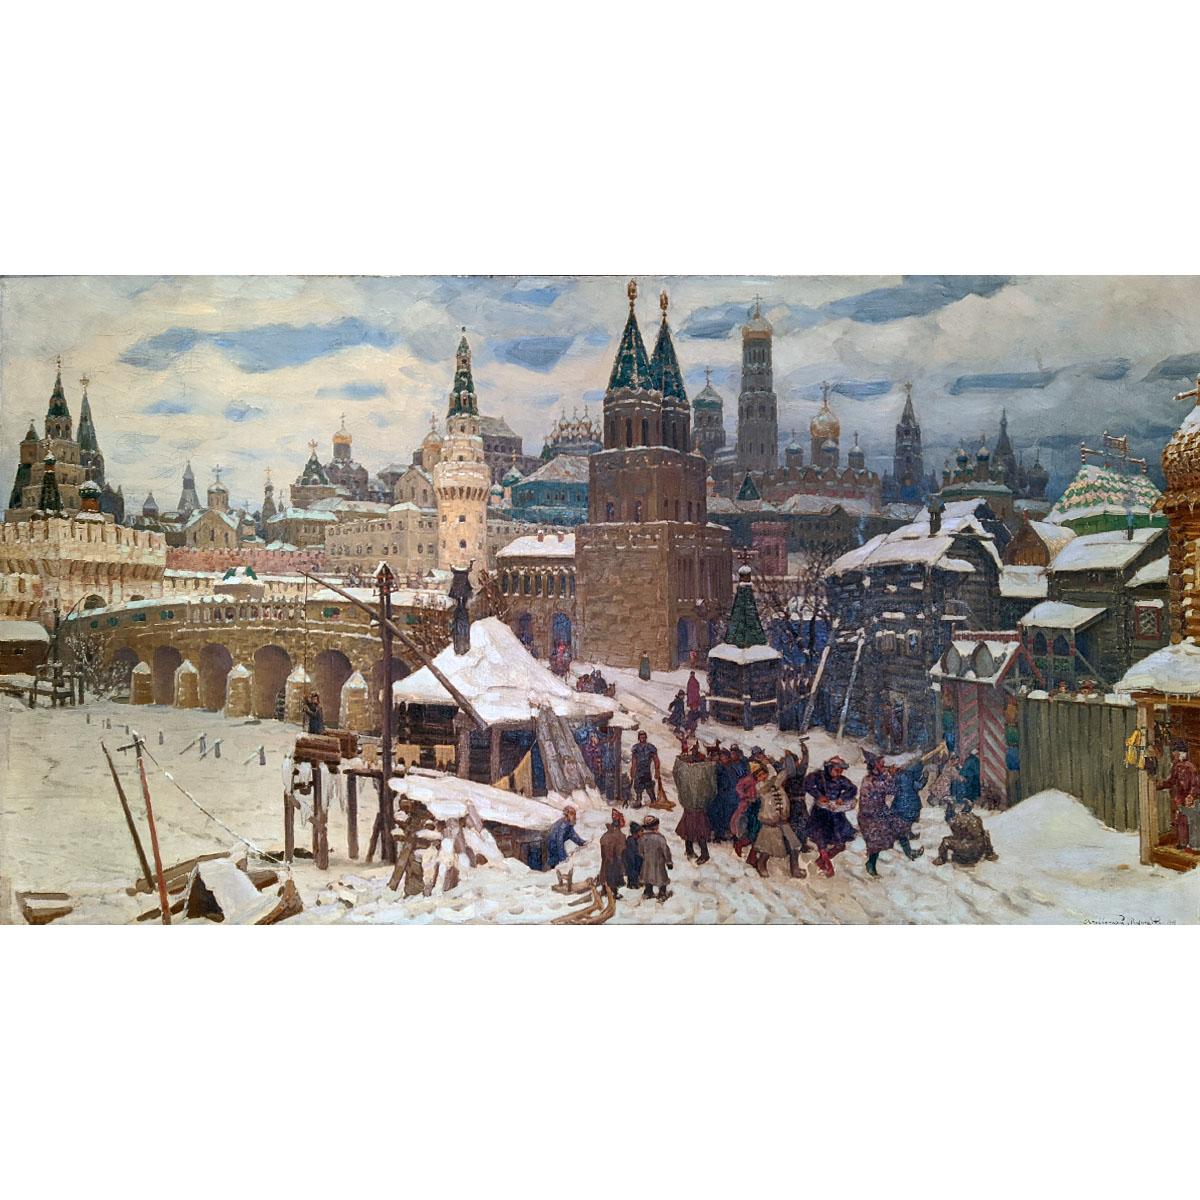 Аполлинарий Васнецов. Всехсвятский мост в конце XVII века. 1901